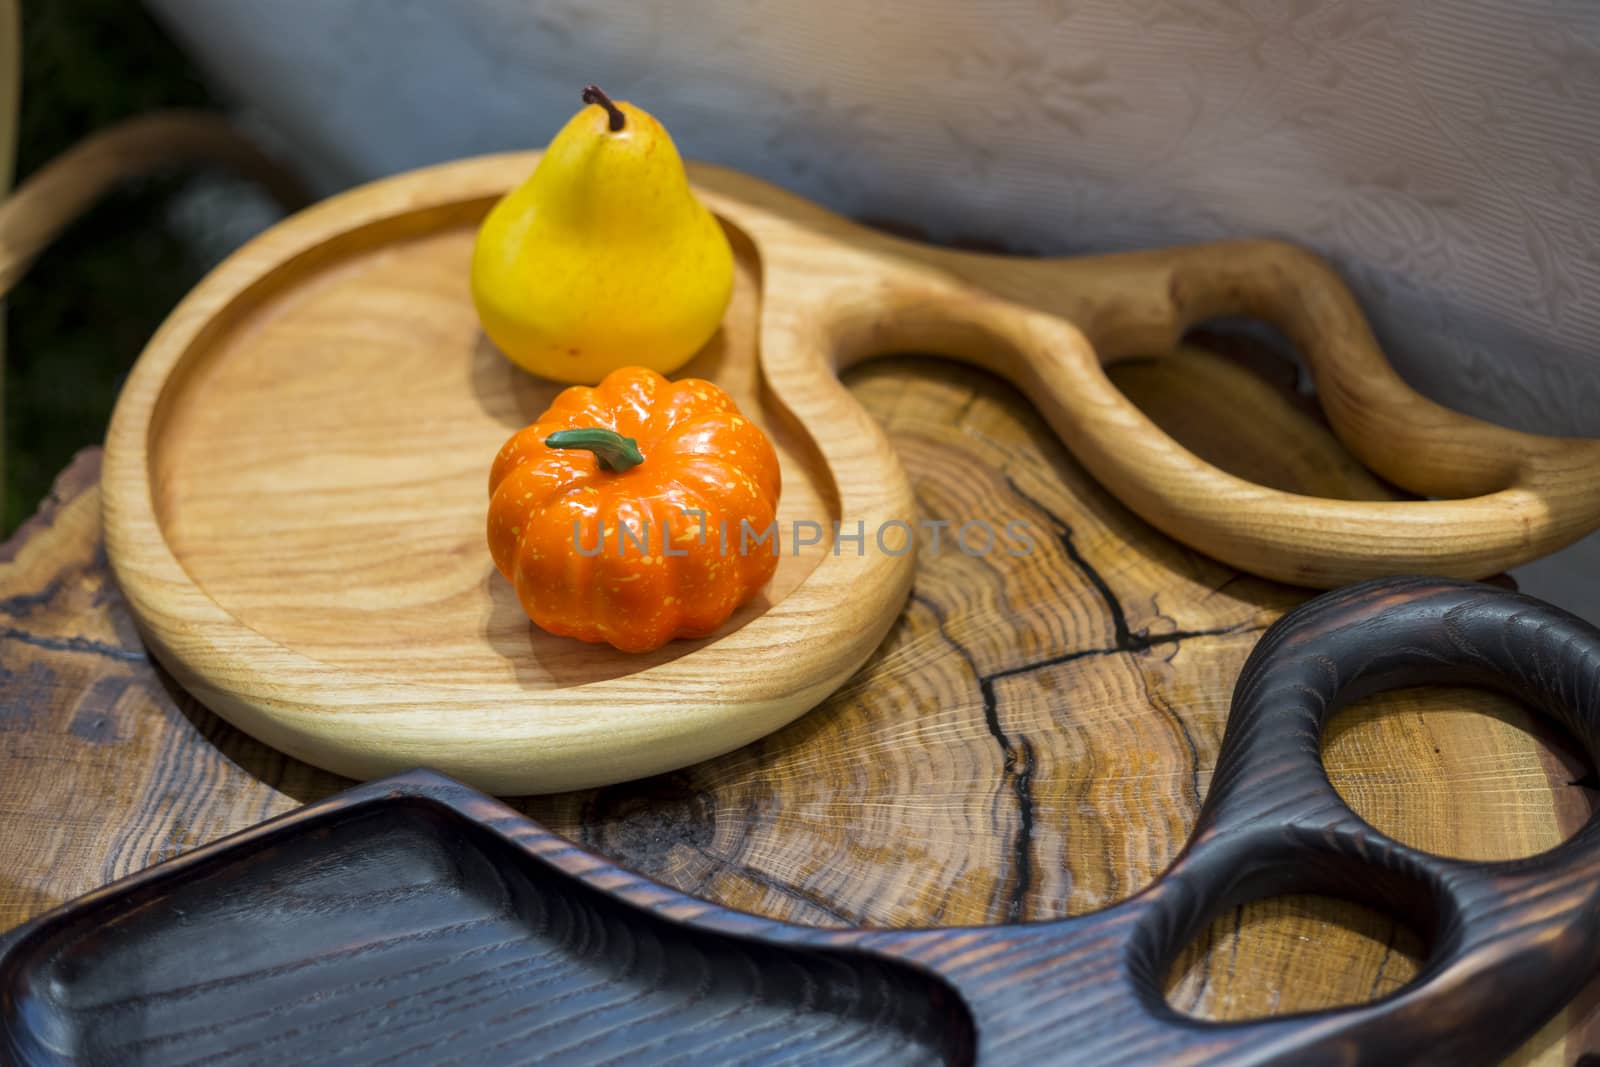 .Decorative wooden cutting boards with autumn pumpkin decorations by galinasharapova